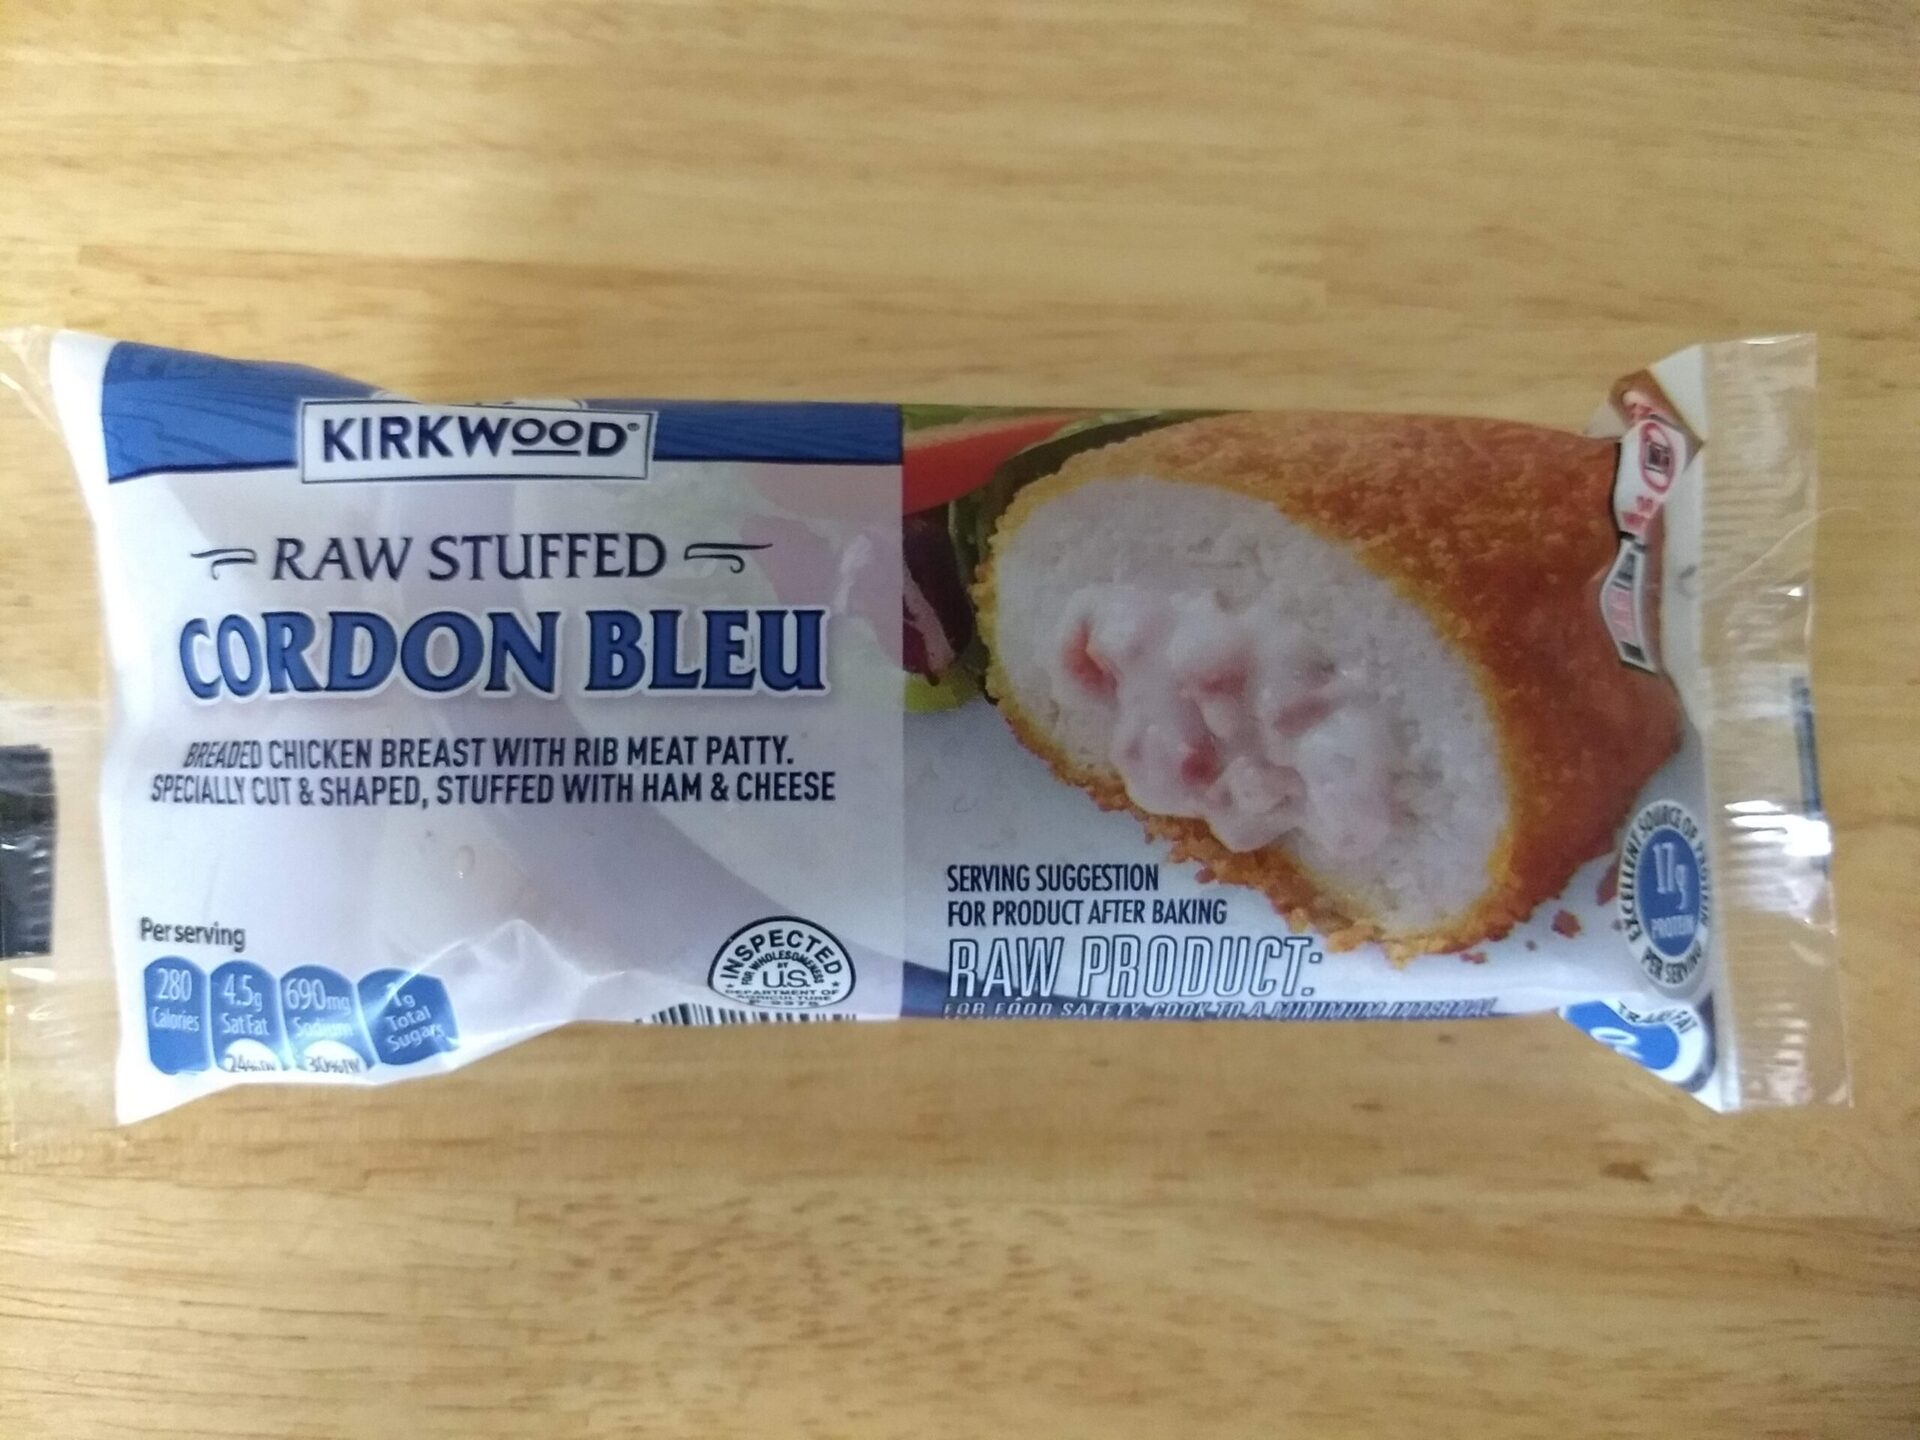 Kirkwood Chicken Cordon Bleu